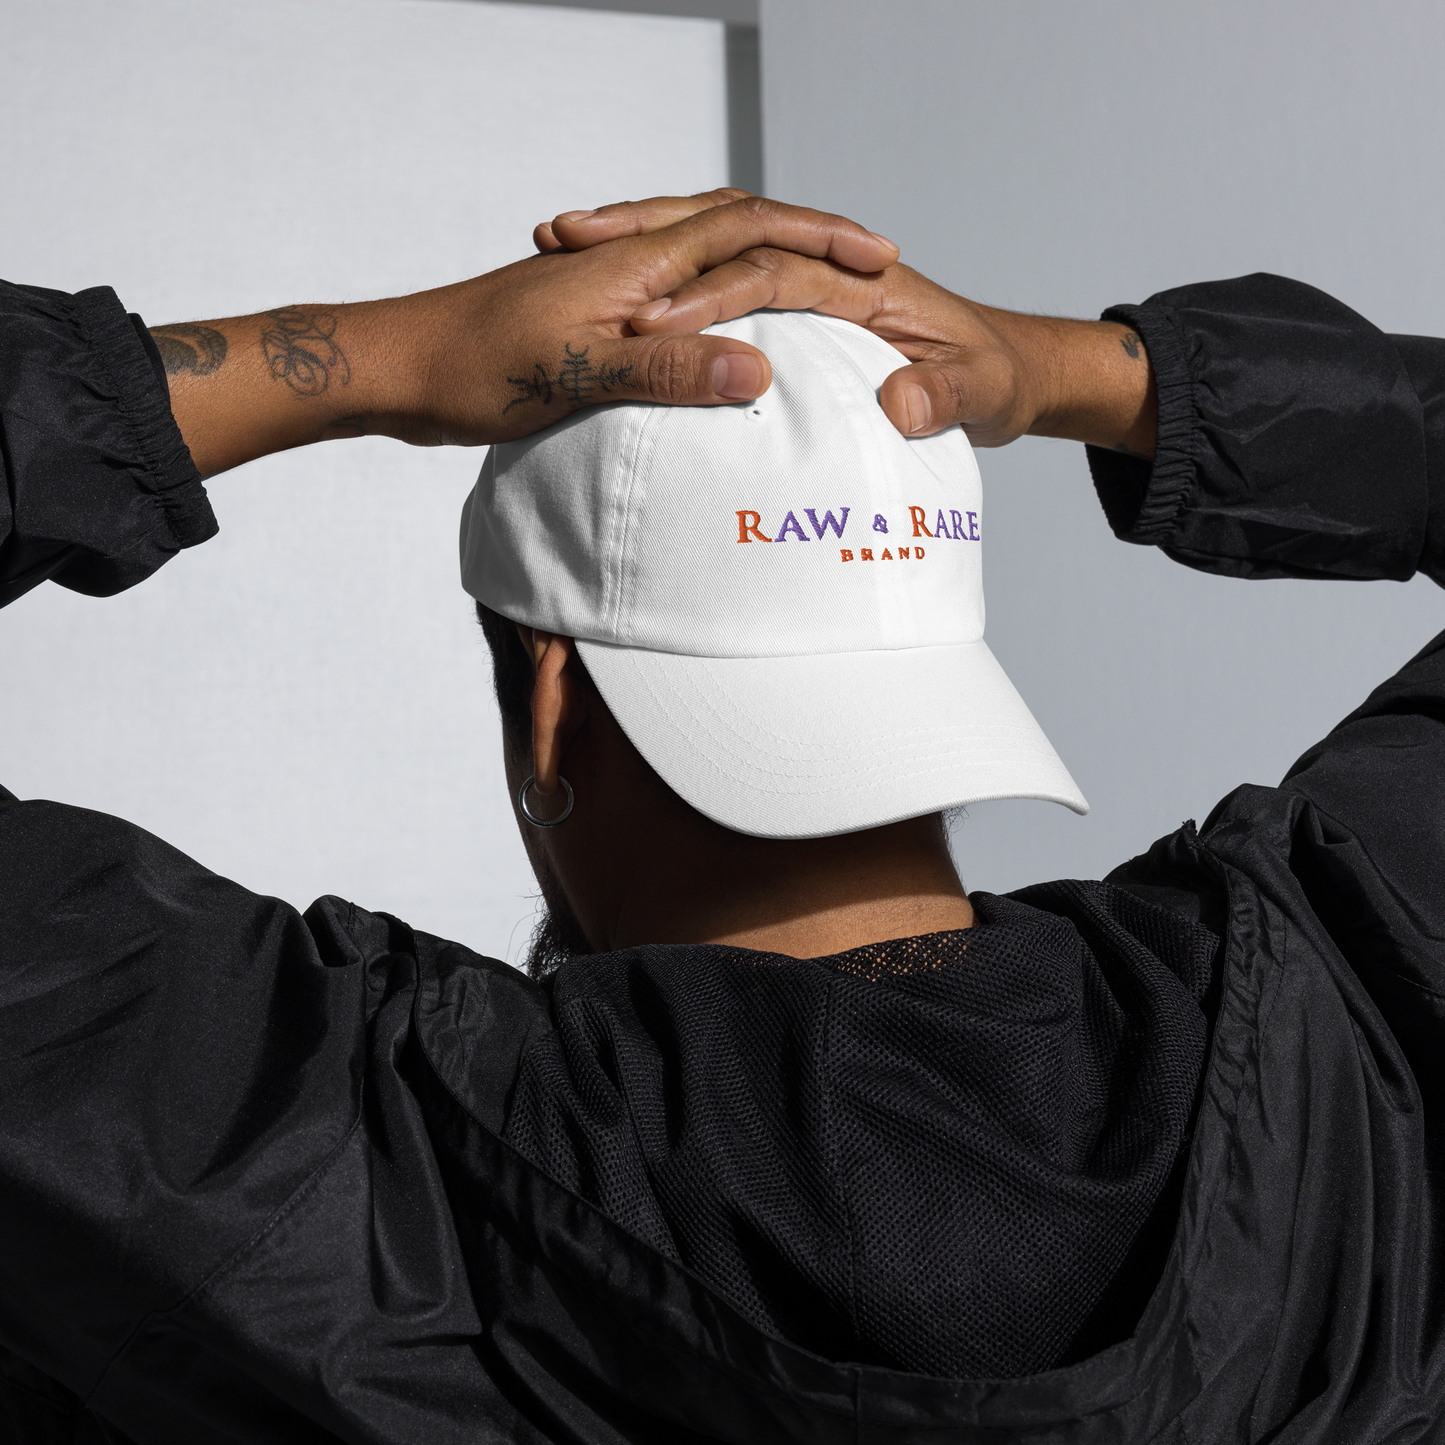 Raw & Rare Brand Dad Hat